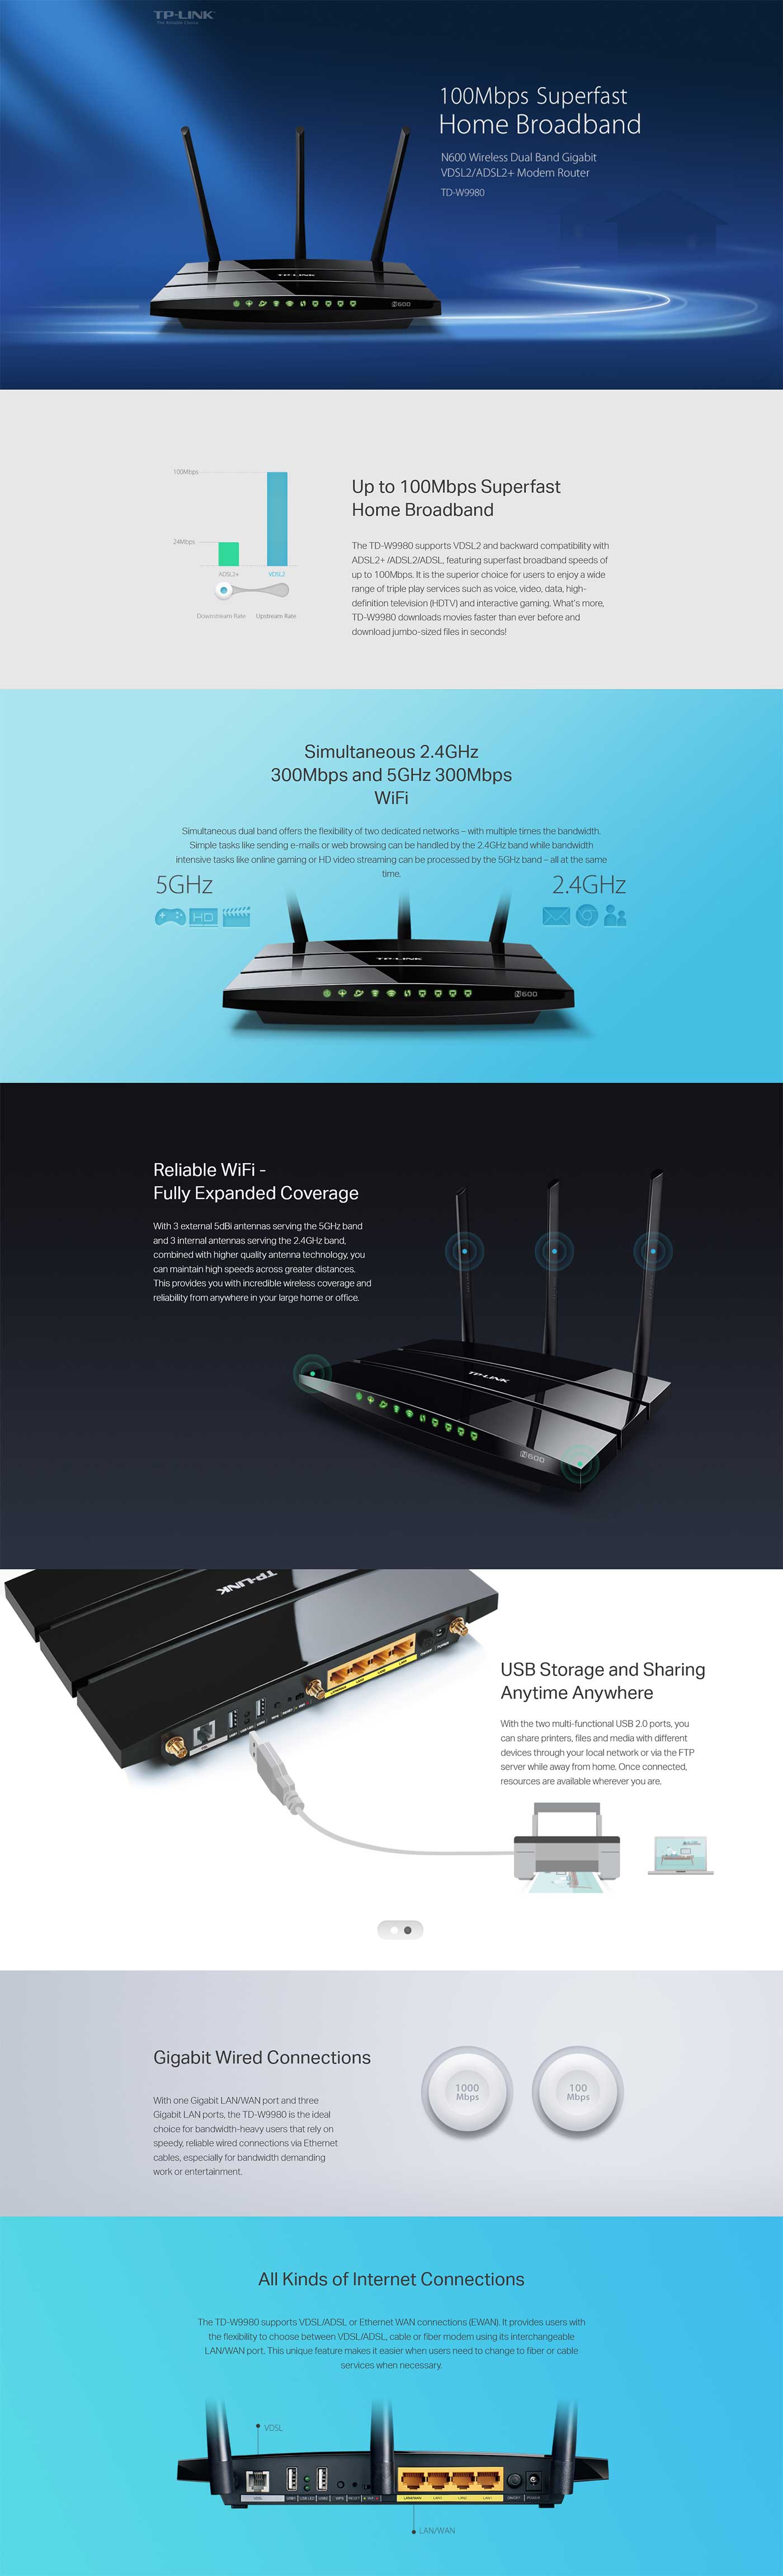 TP-Link TD-W9980 N600 Wireless Modem Router Details